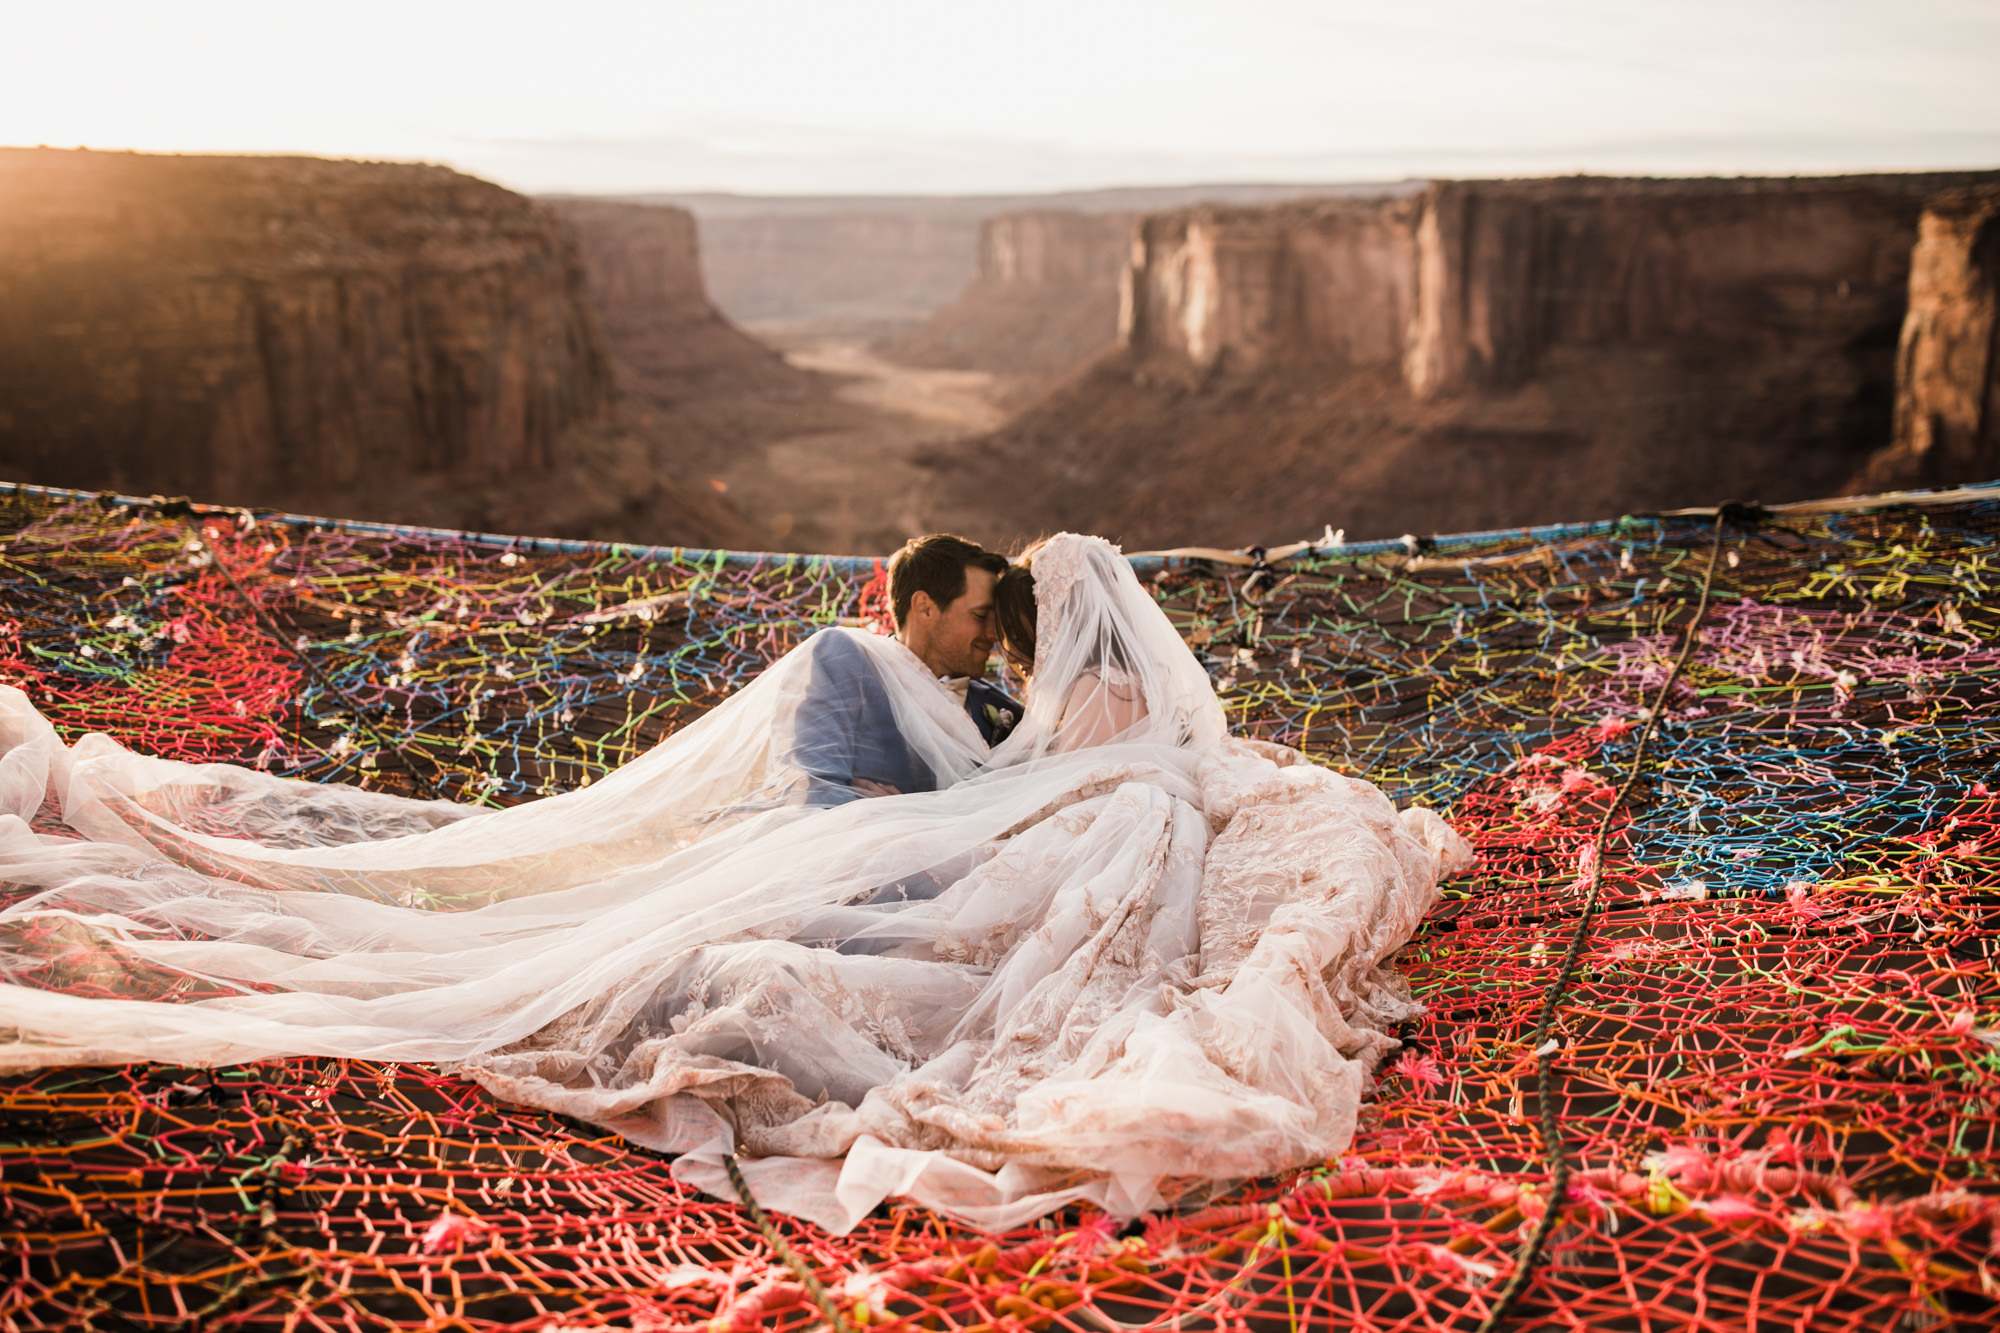 spacenet wedding 400 feet above a canyon in moab, utah | adventurous desert elopement | galia lahav bride | the hearnes adventure wedding photography | www.thehearnes.com